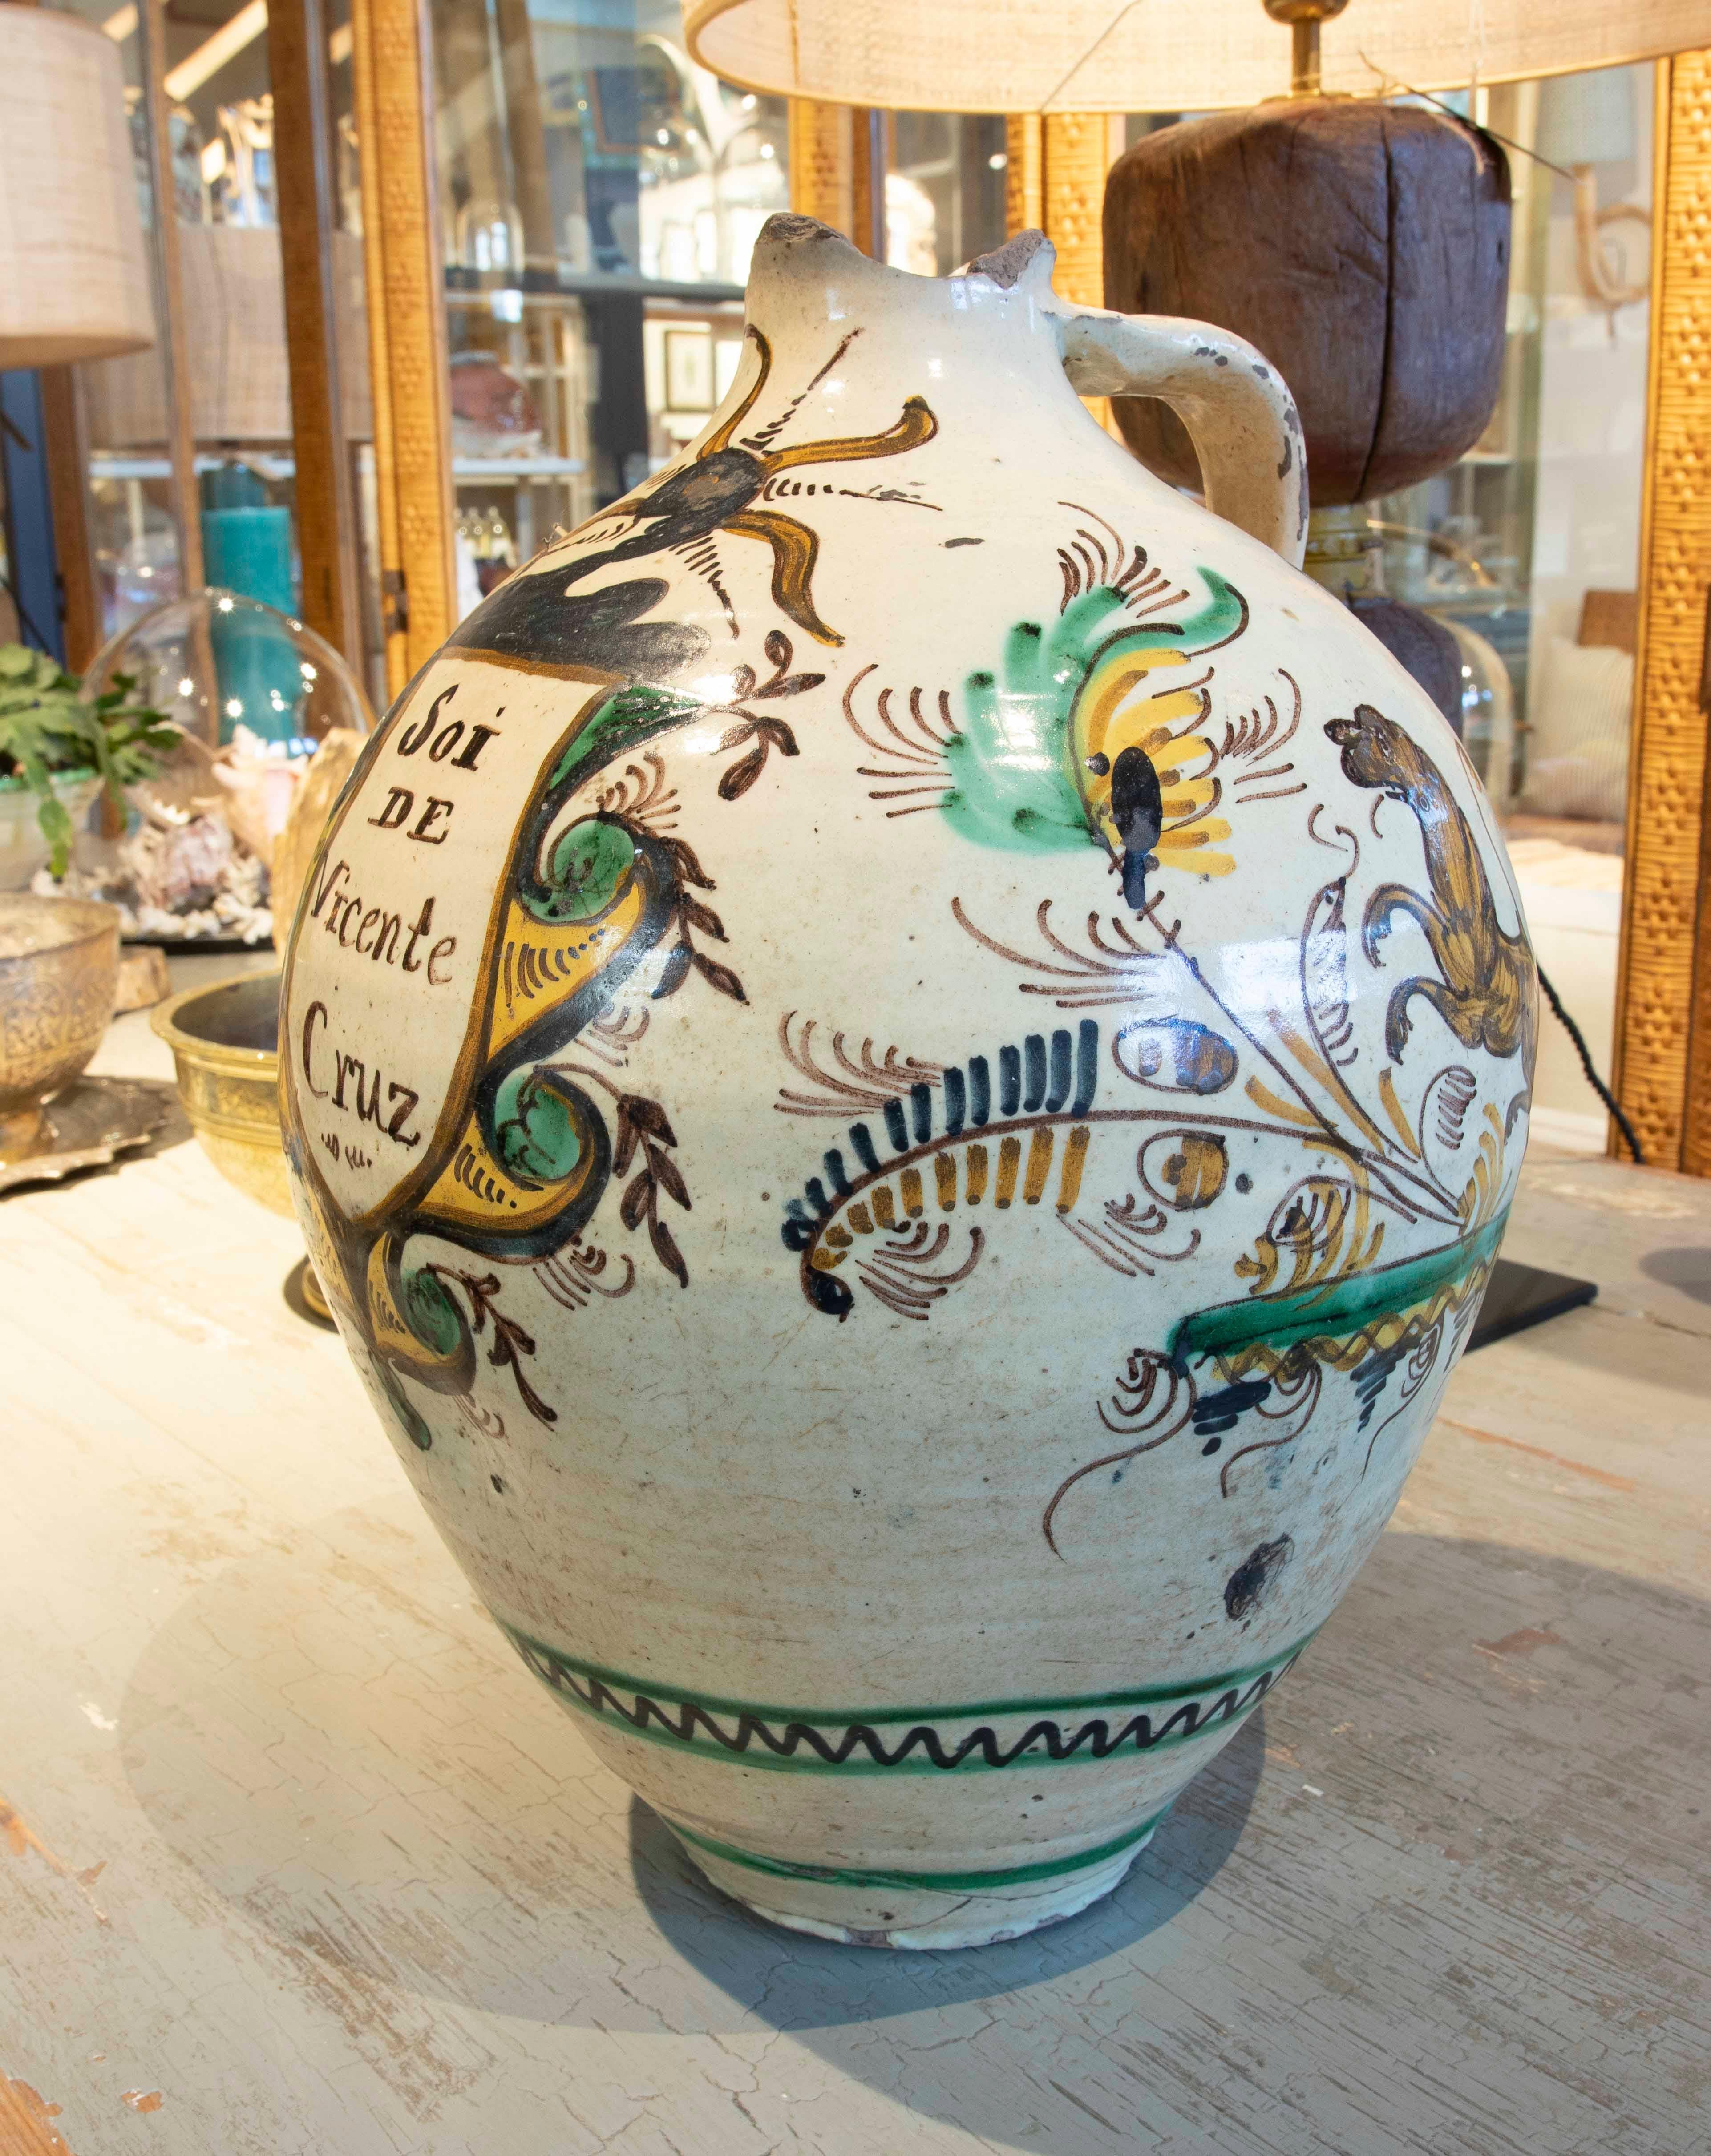 19th Century Spanish Glazed Ceramic Vase with the Inscription 